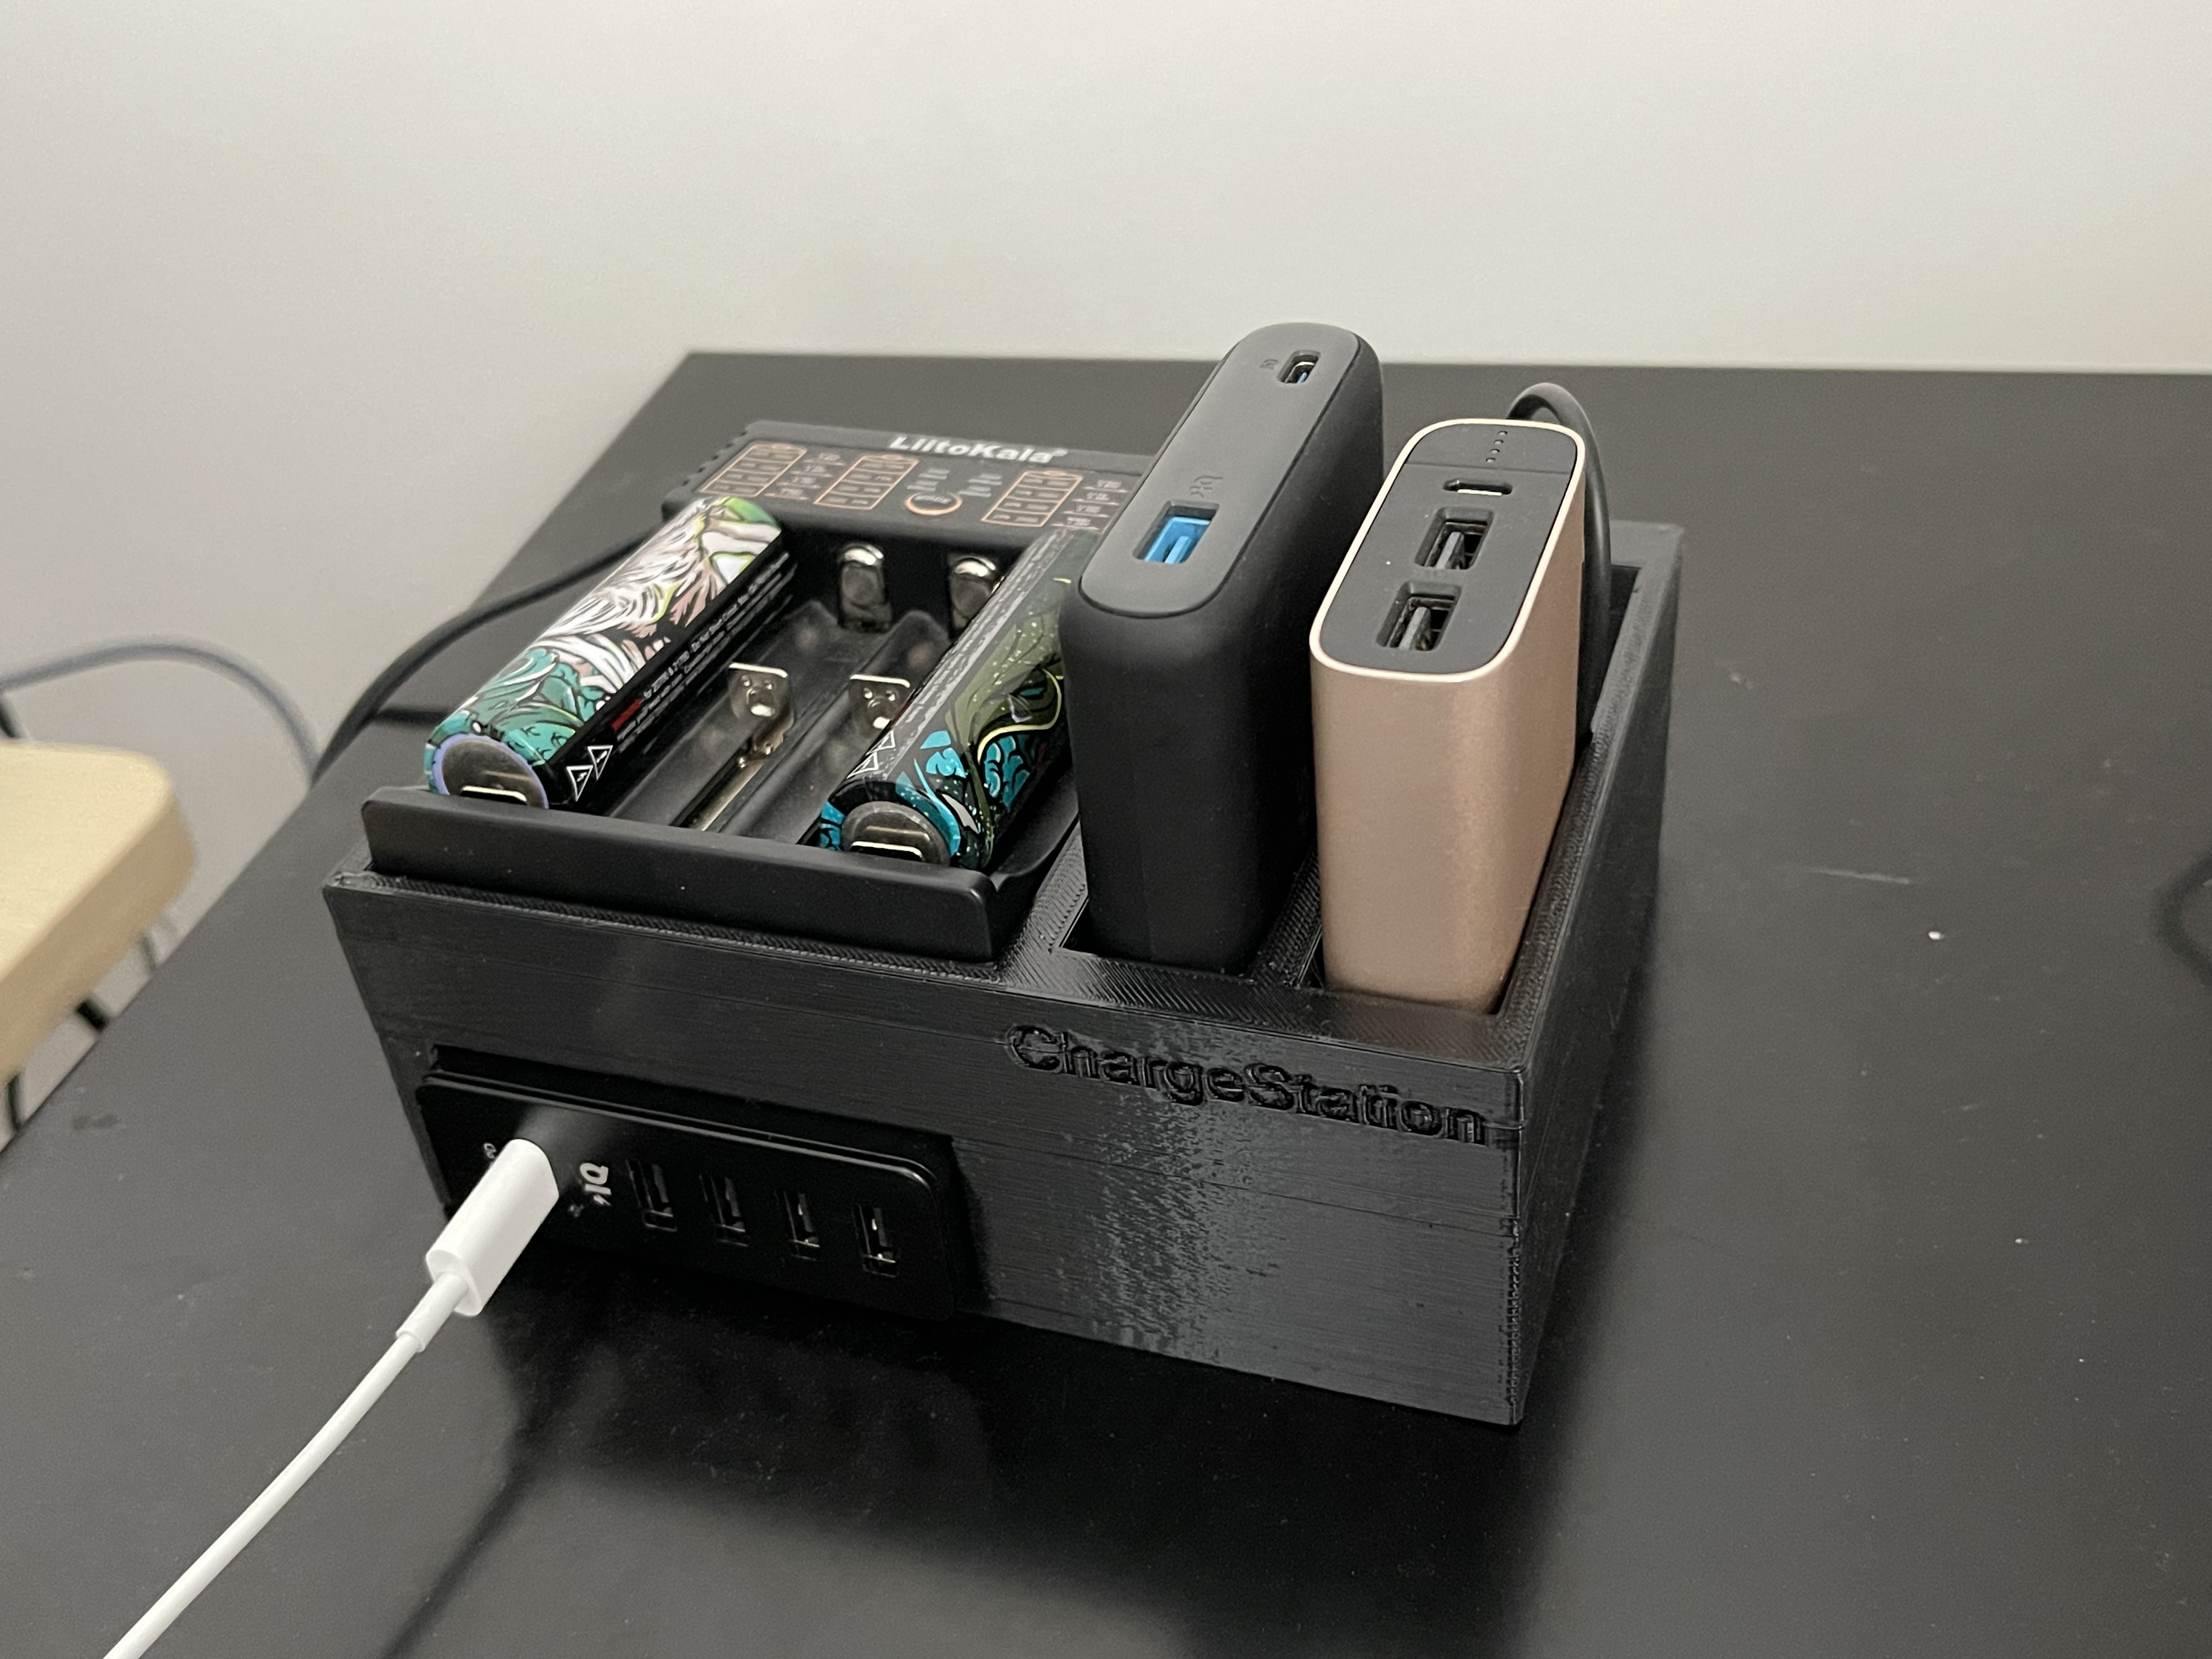 Desktop Charging Station - Fits Anker 5 Port Charger / 18650 battery charger / 2 drawers for power banks etc